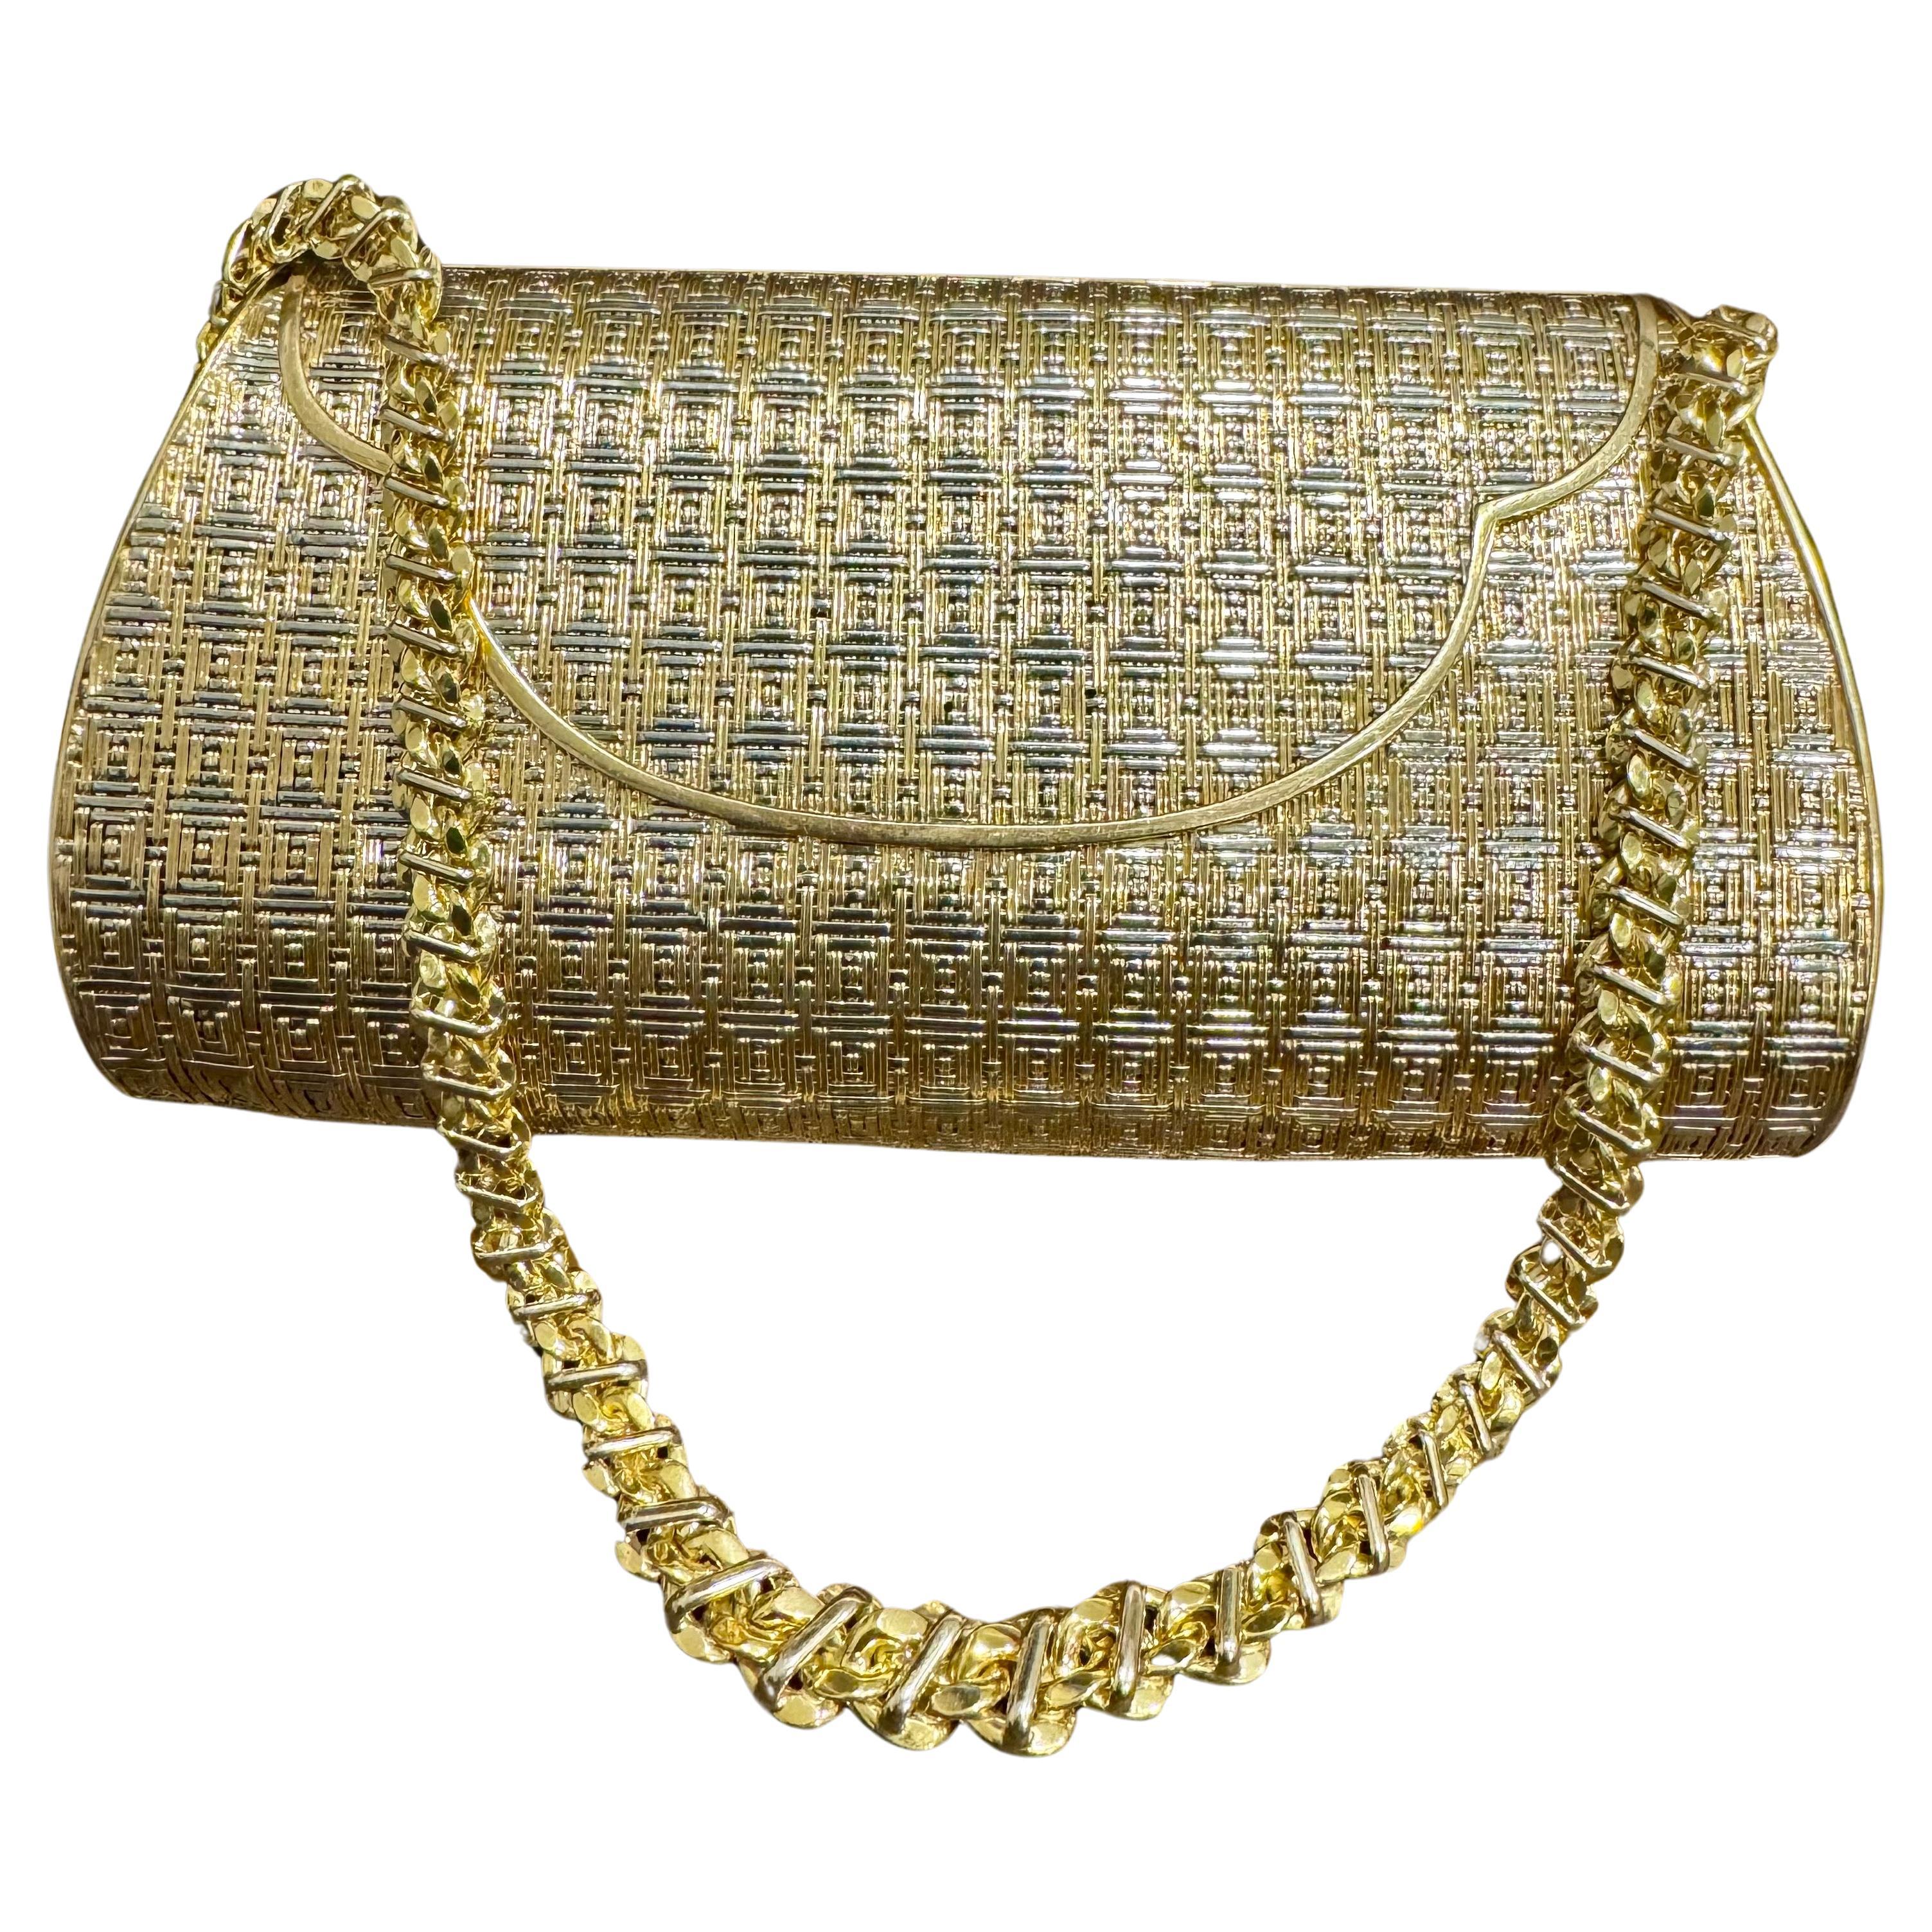  378 Gm of 18 Karat Yellow Gold Mesh Clutch Handbag with Shoulder Chain, Vintage